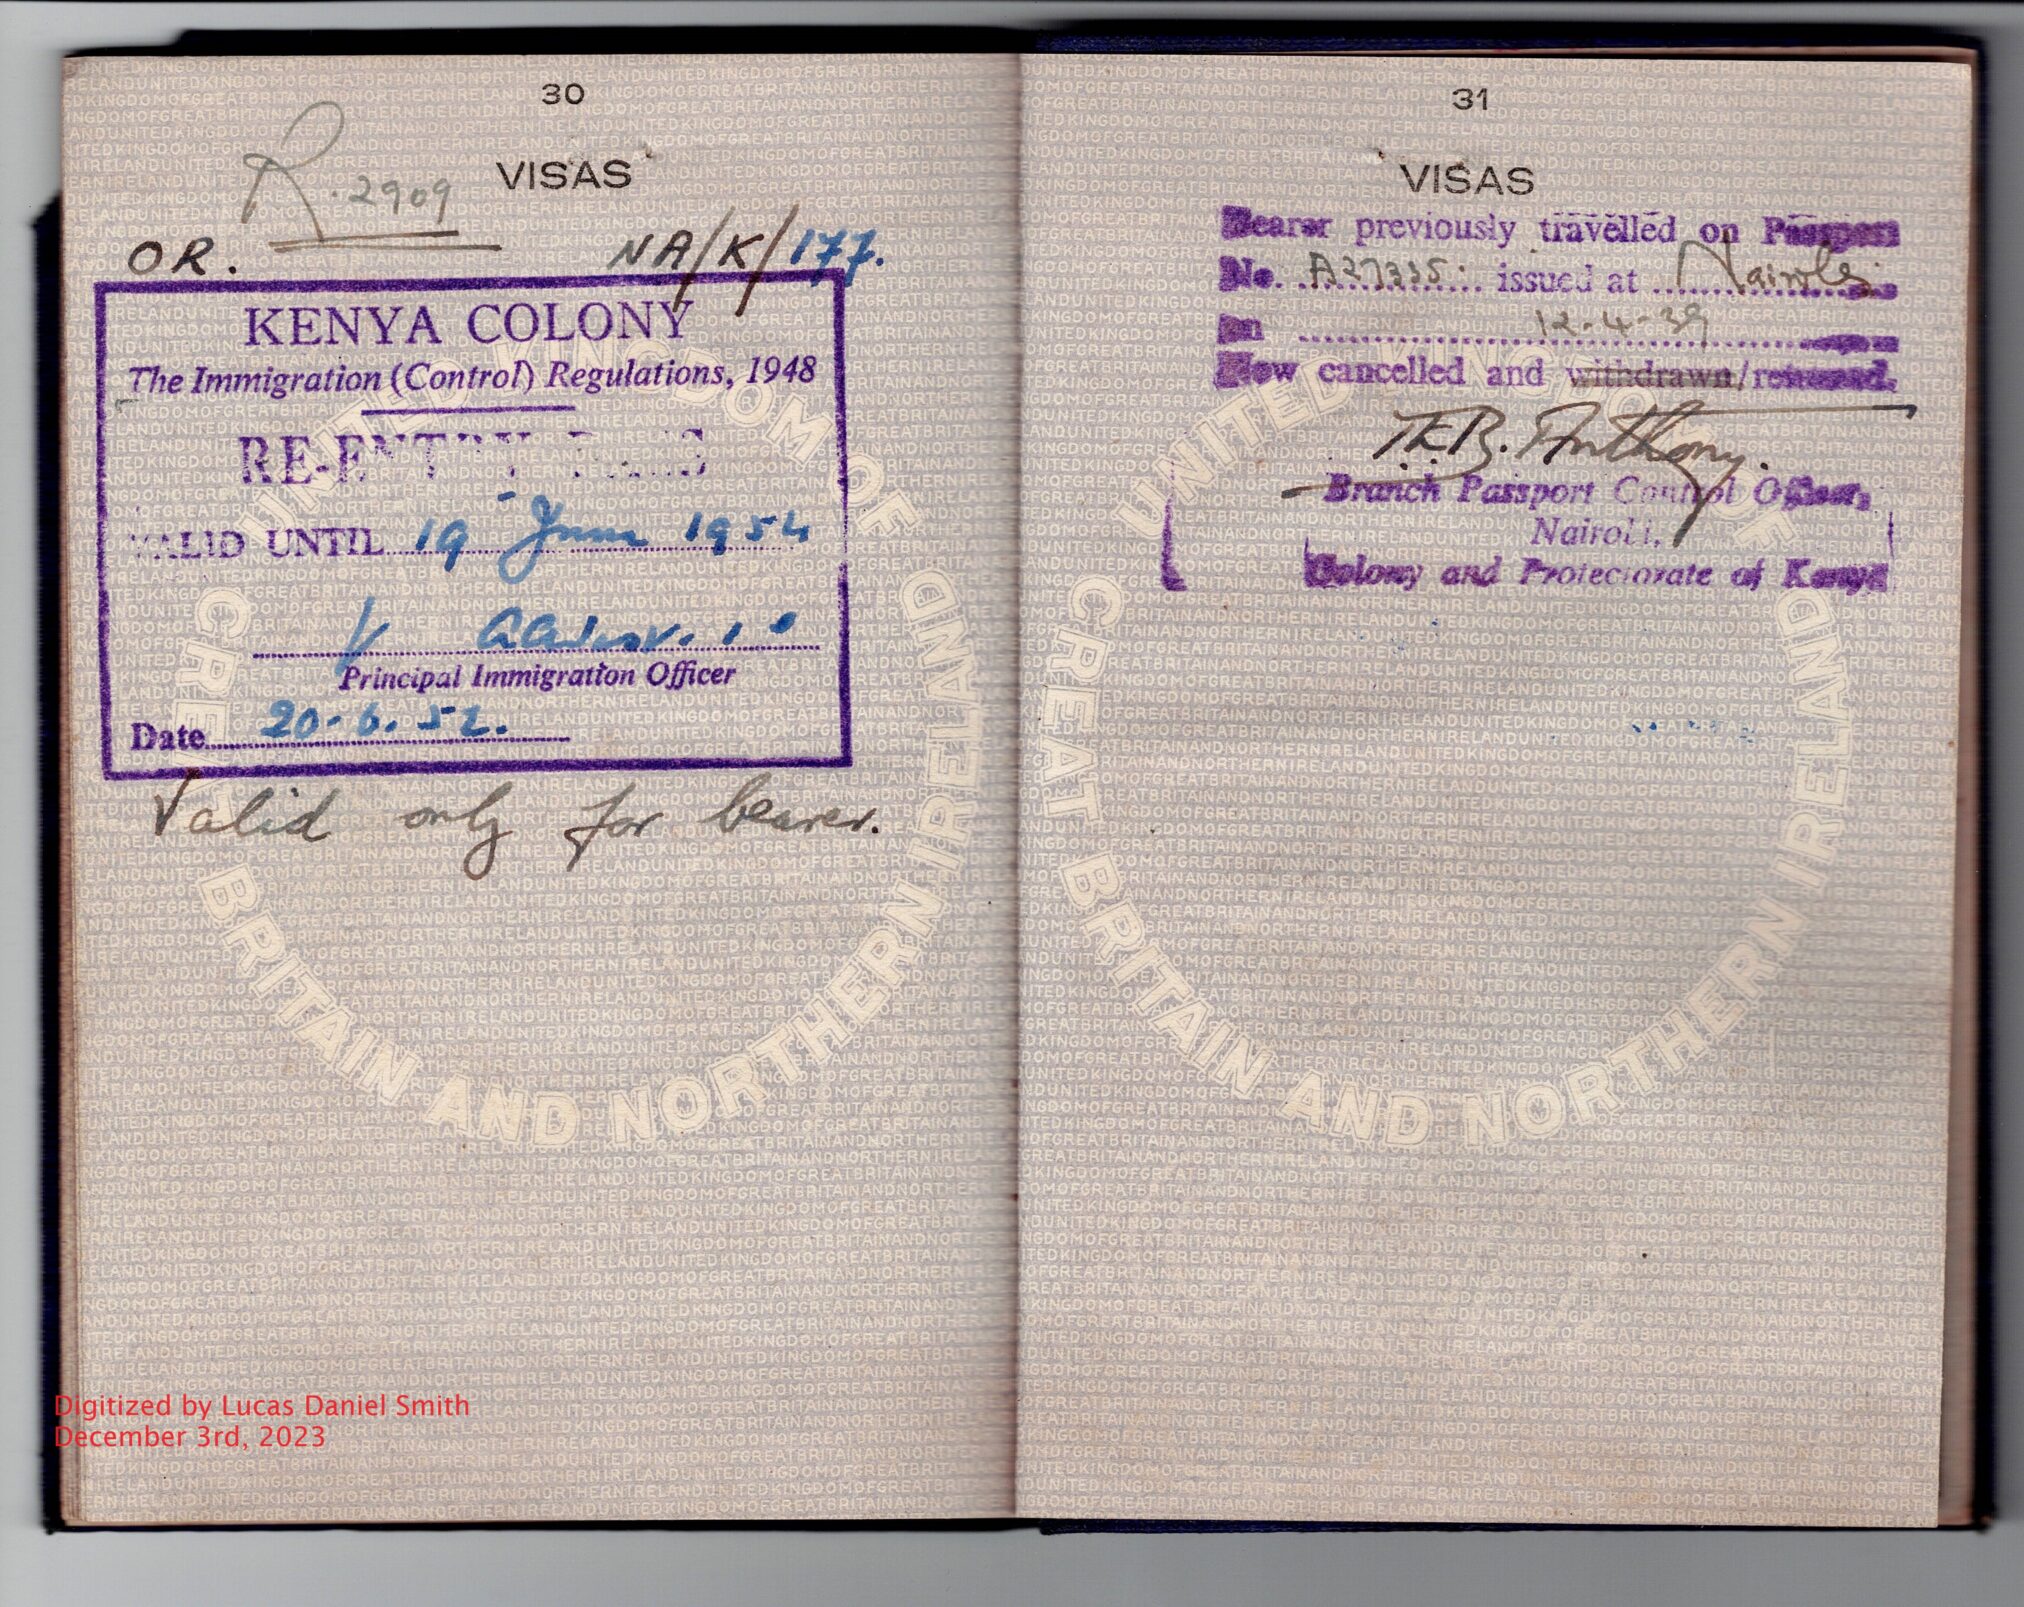 kenya-passport-colony-and-protectorate-of-kenya-1952-kenyan-barack-obama-lucas-smith-17